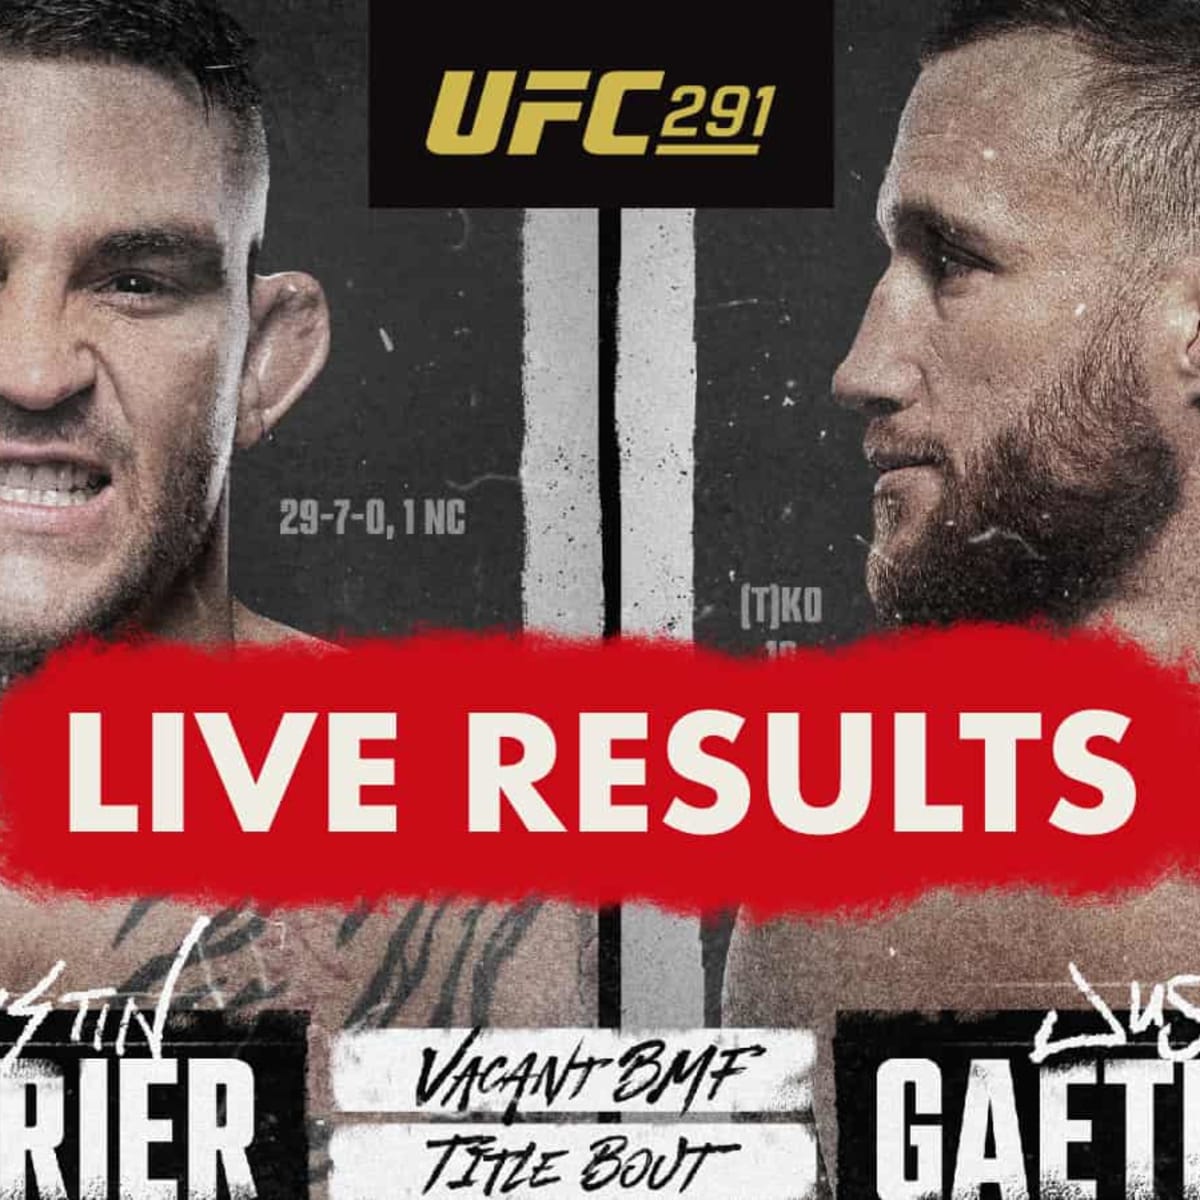 UFC 291 Results Poirier vs